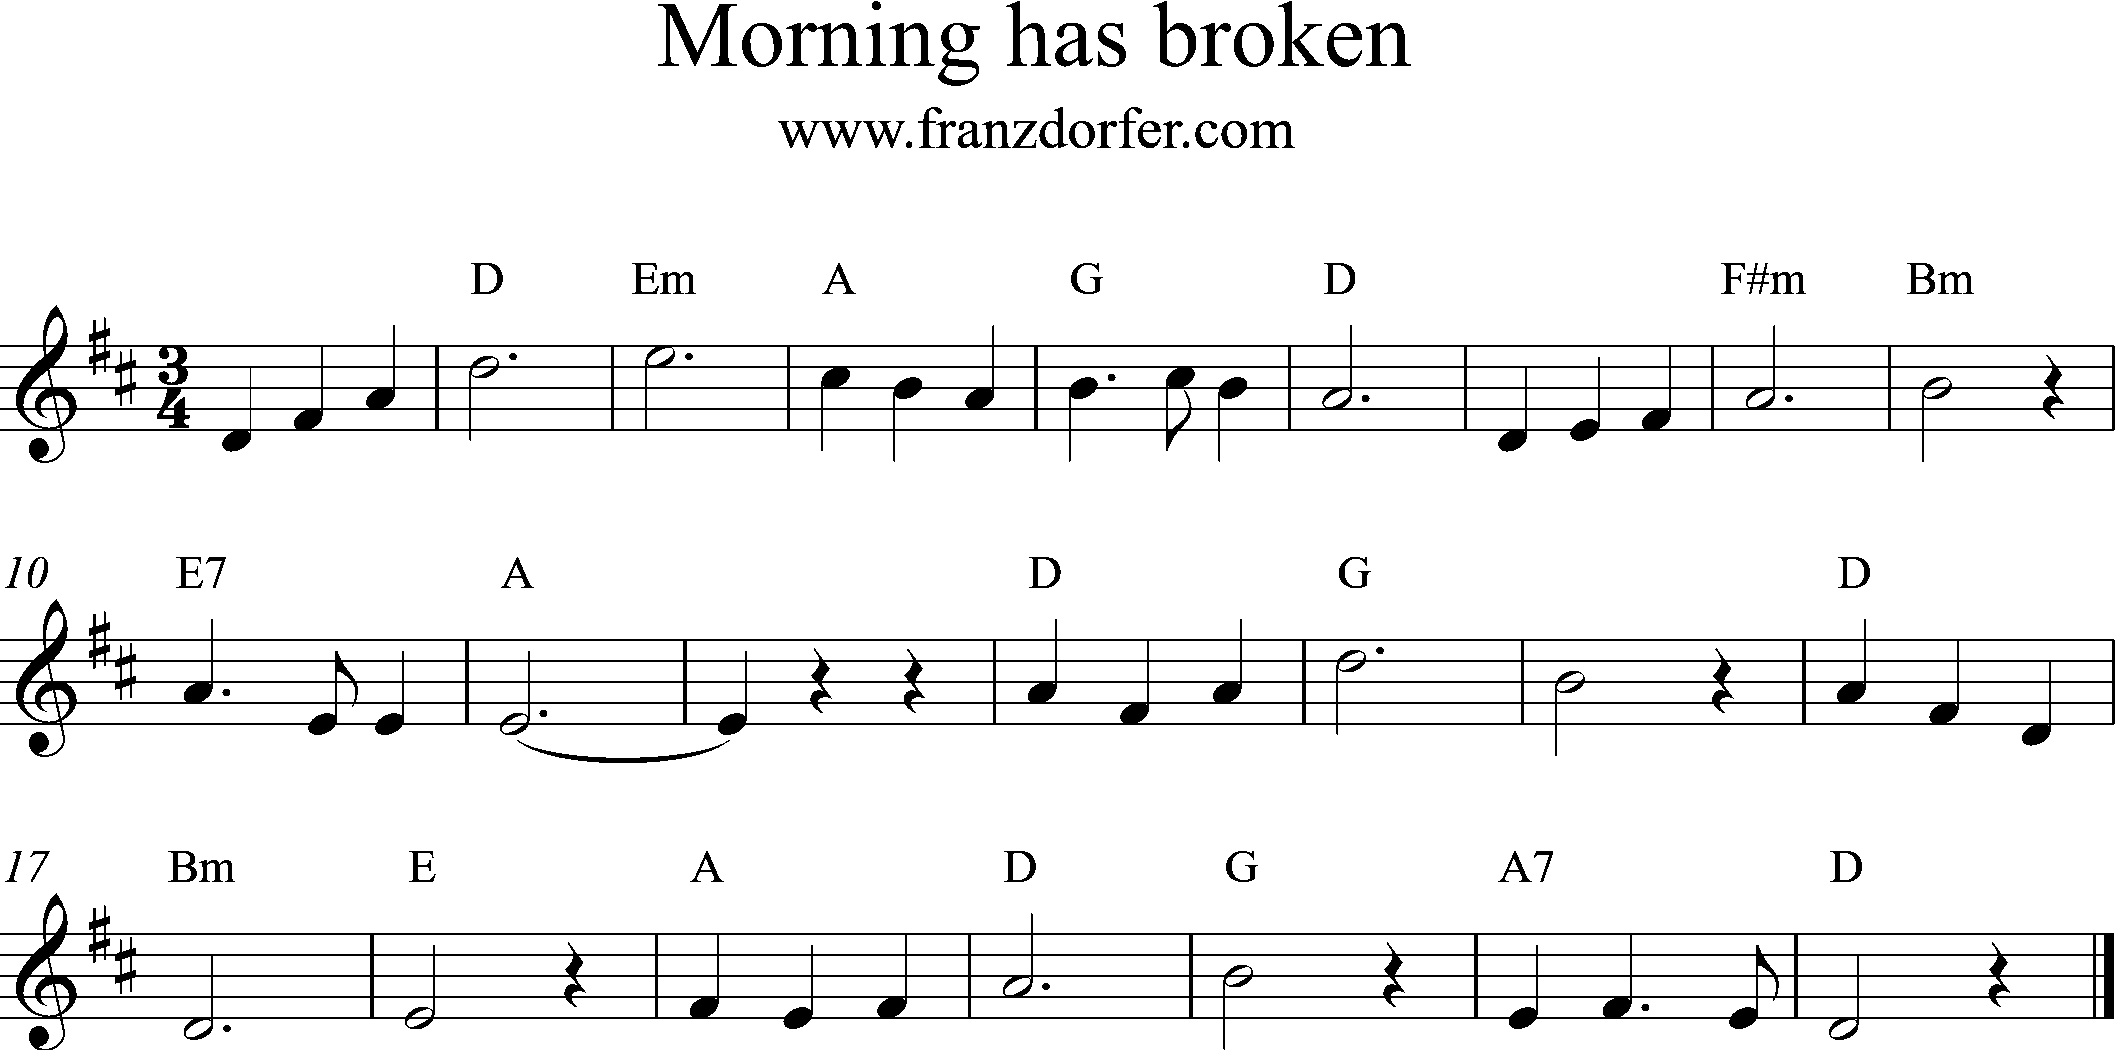 Noten für Querflöte, G-Dur, Morning has broken